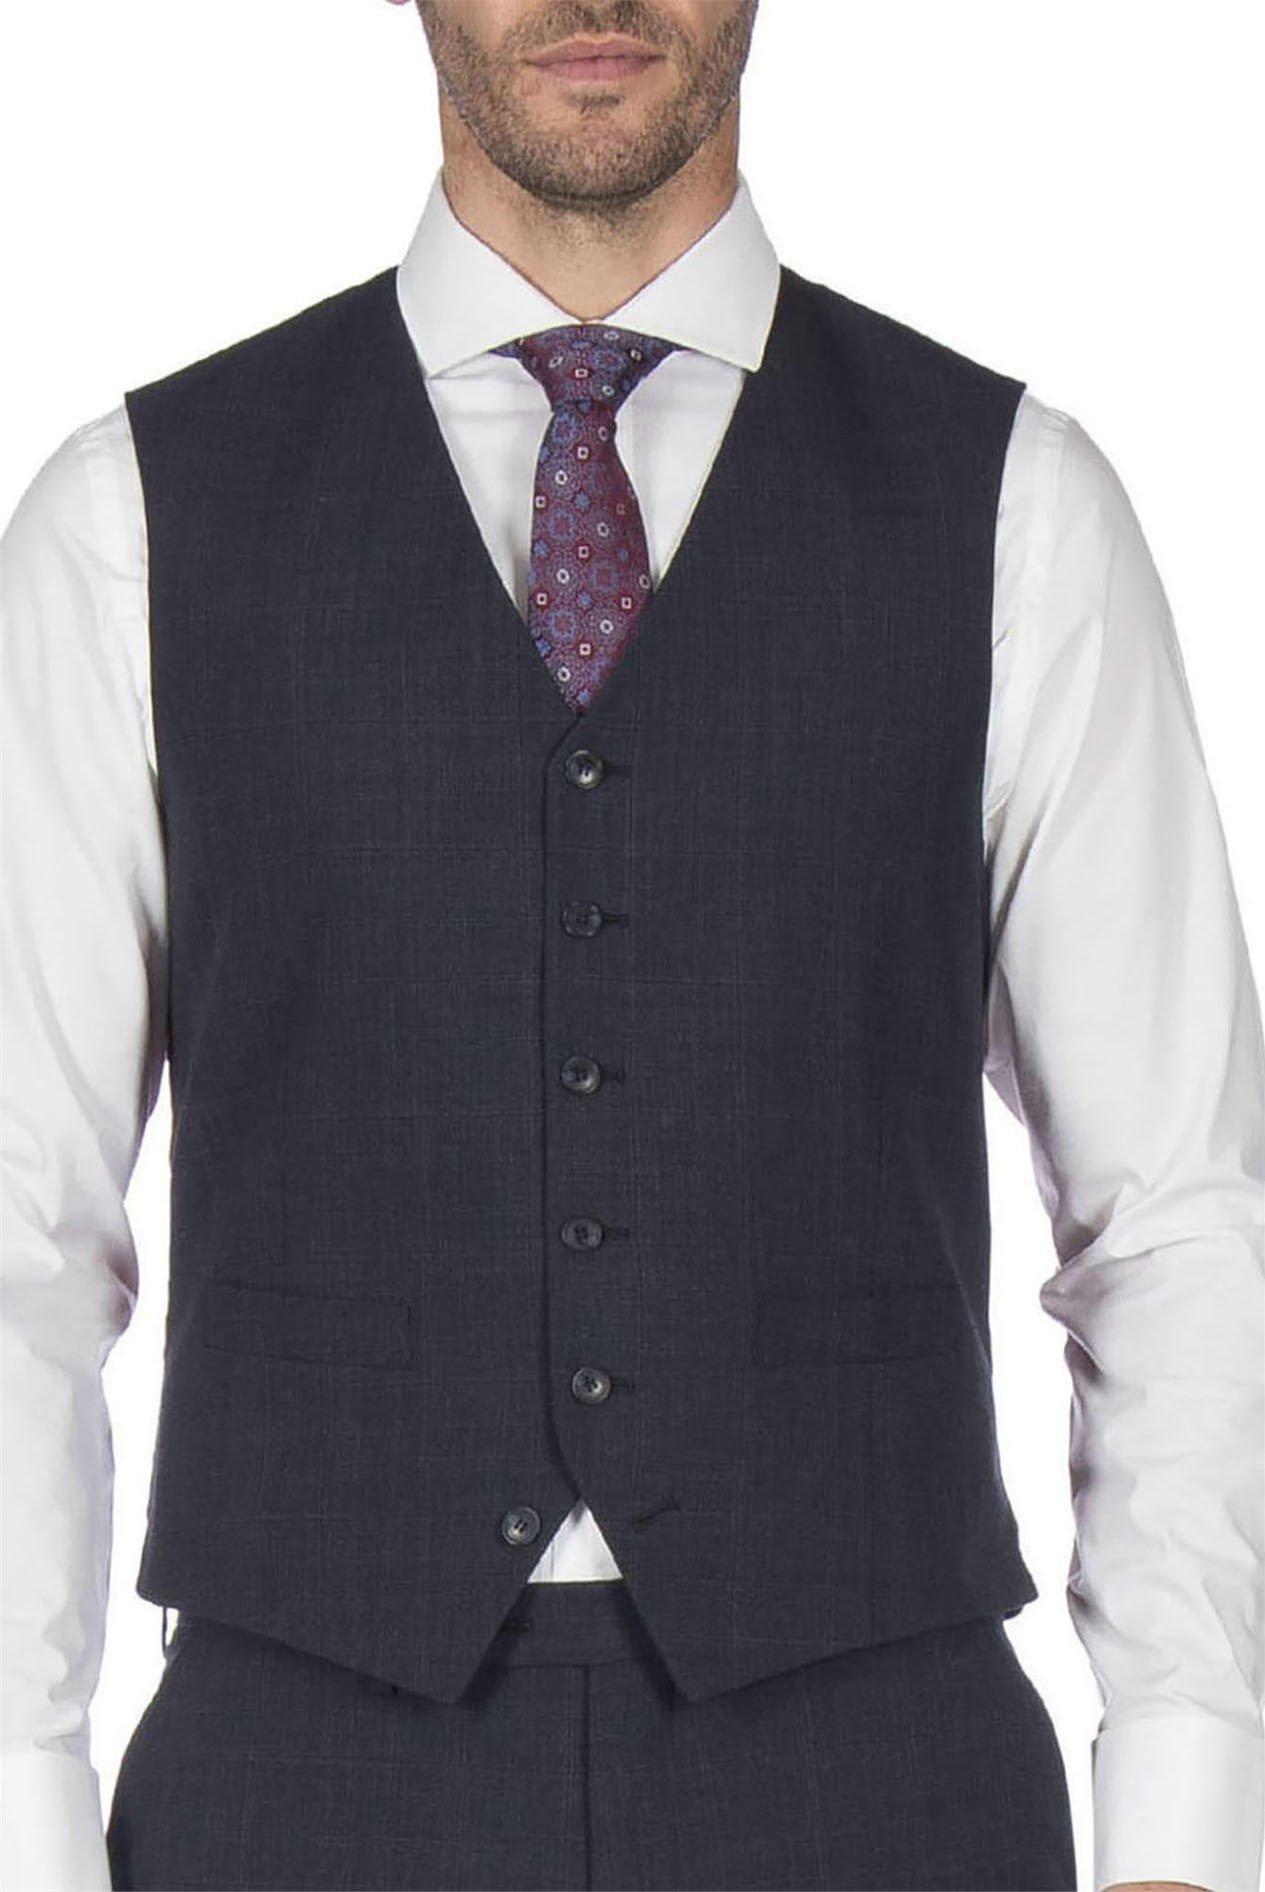 overcheck tailored fit waistcoat